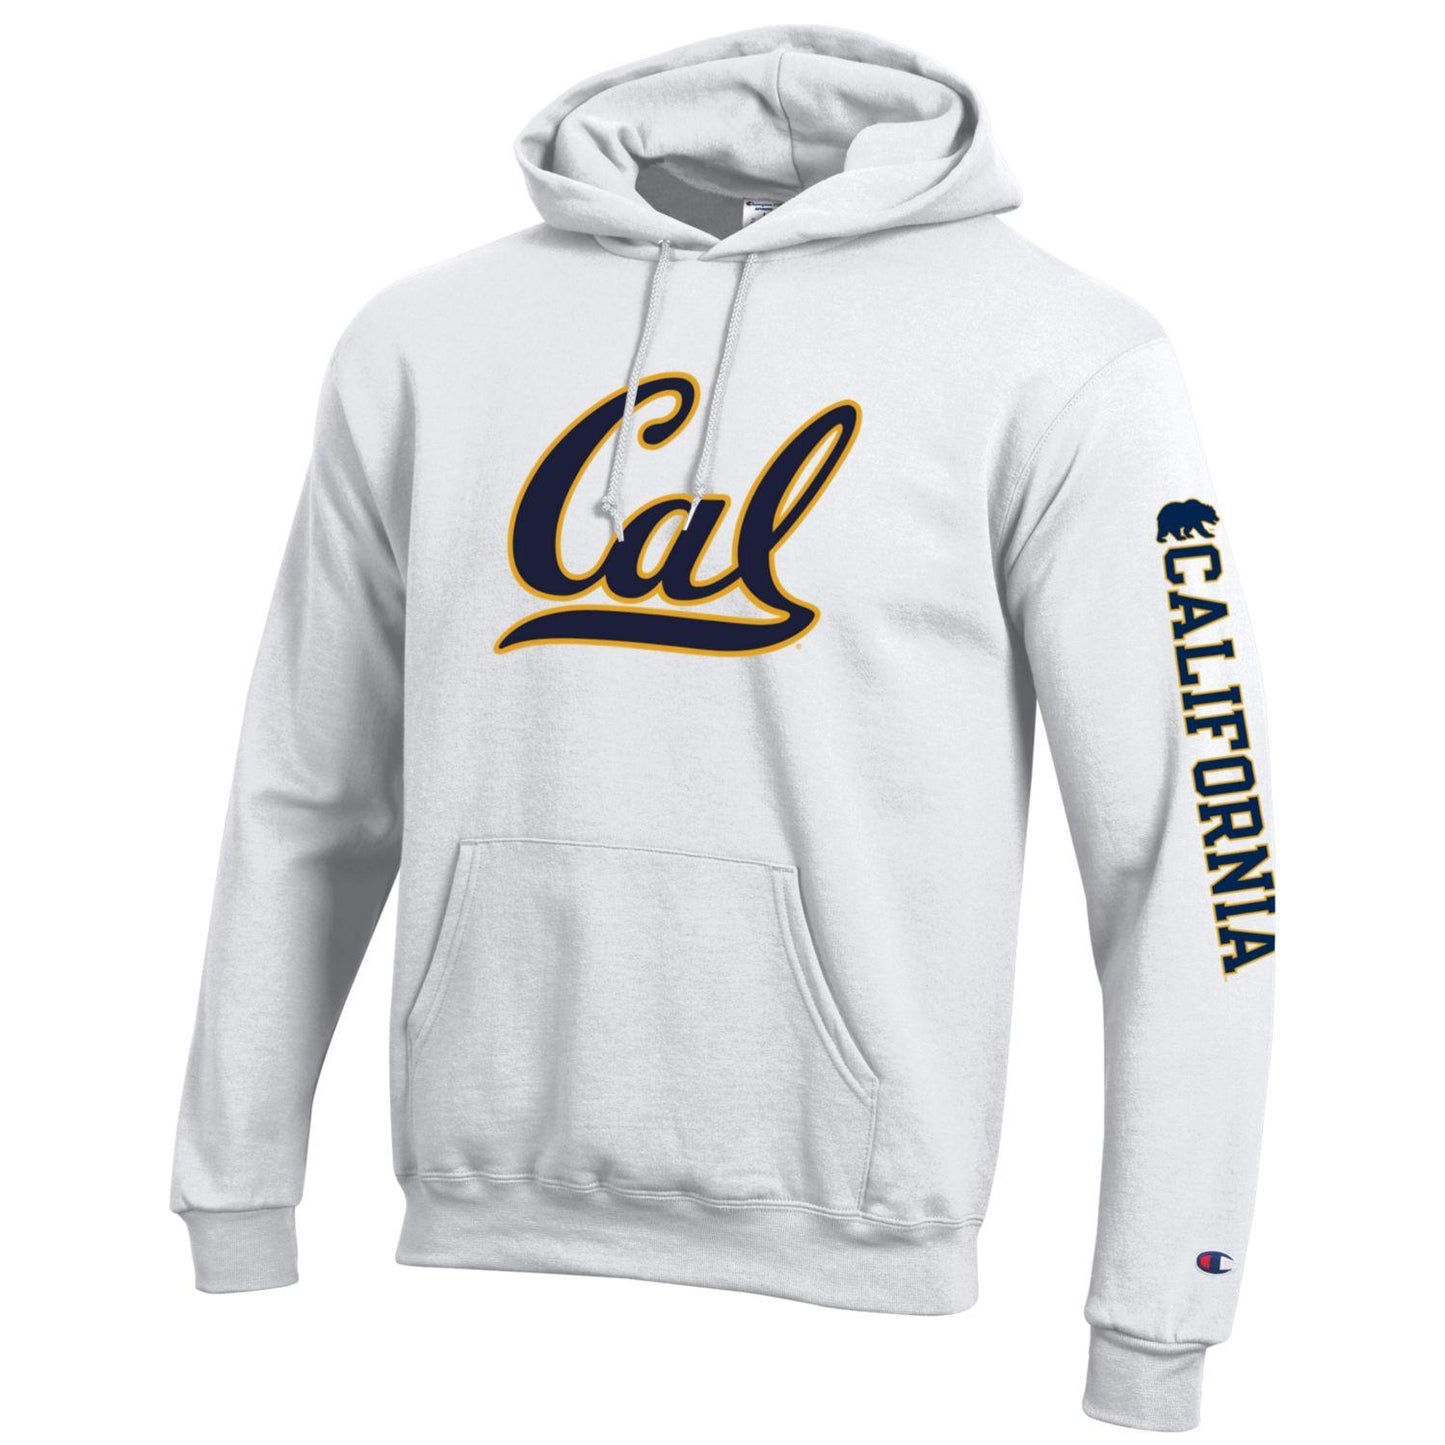 U.C. Berkeley Cal Script Bold Champion hoodie sweatshirt-White-Shop College Wear